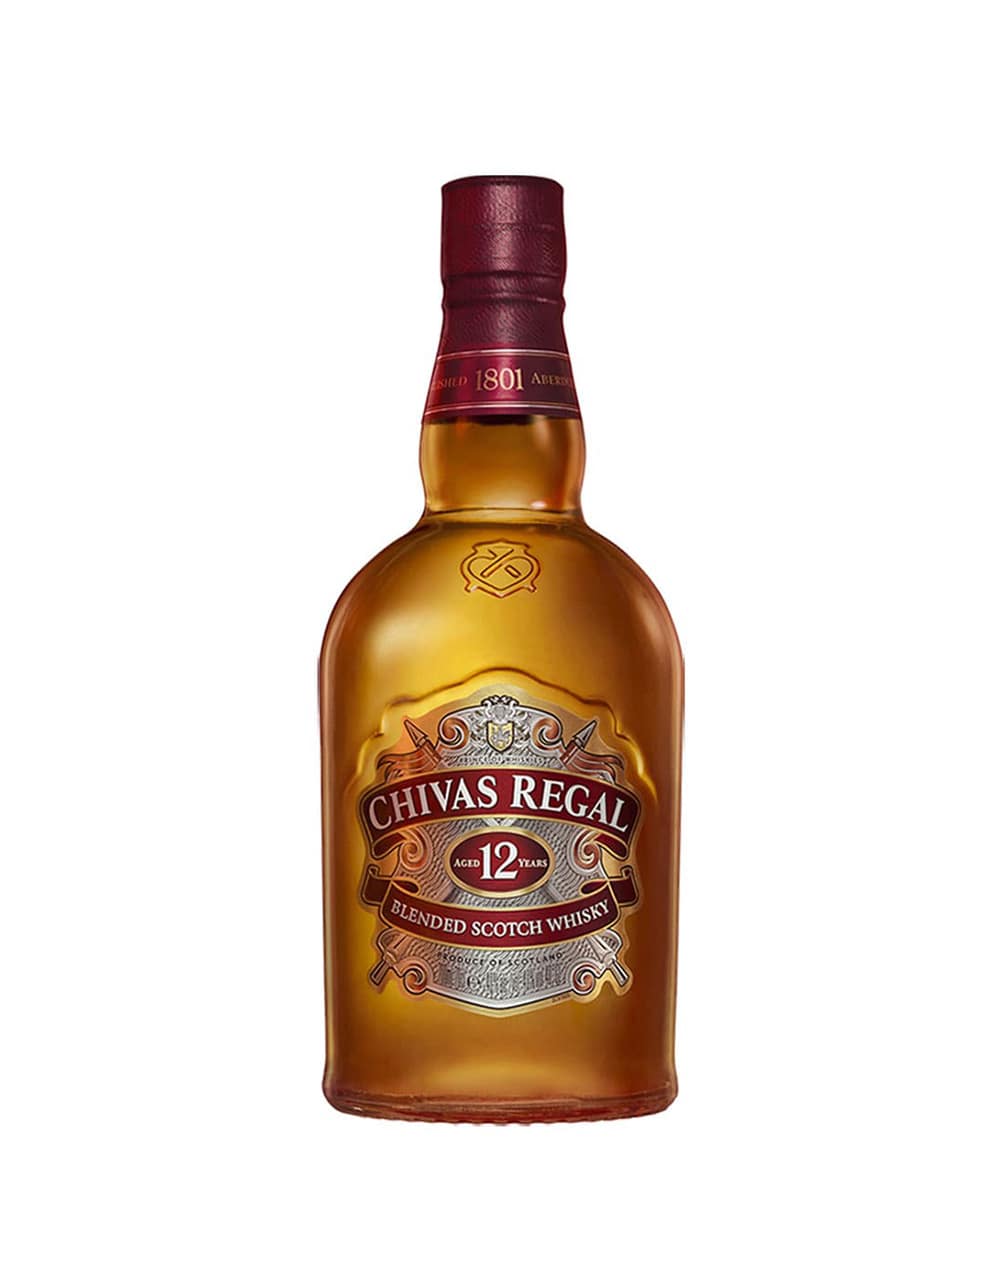 Chivas Regal 12 Year old Scotch Whisky 200ml